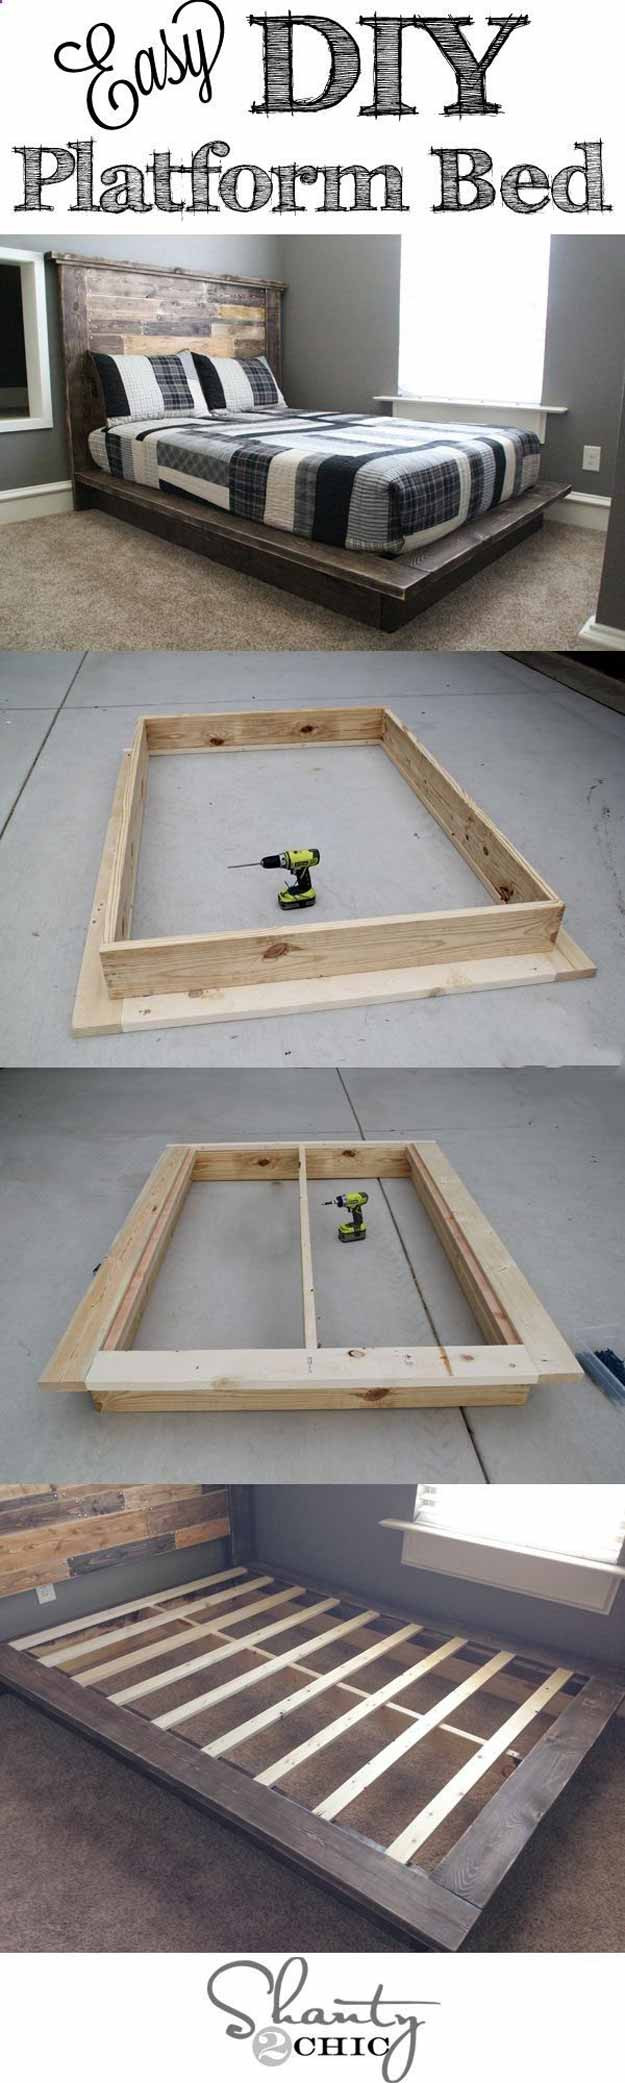 Best ideas about DIY Wood Platform Bed
. Save or Pin DIY Platform Bed Ideas Now.